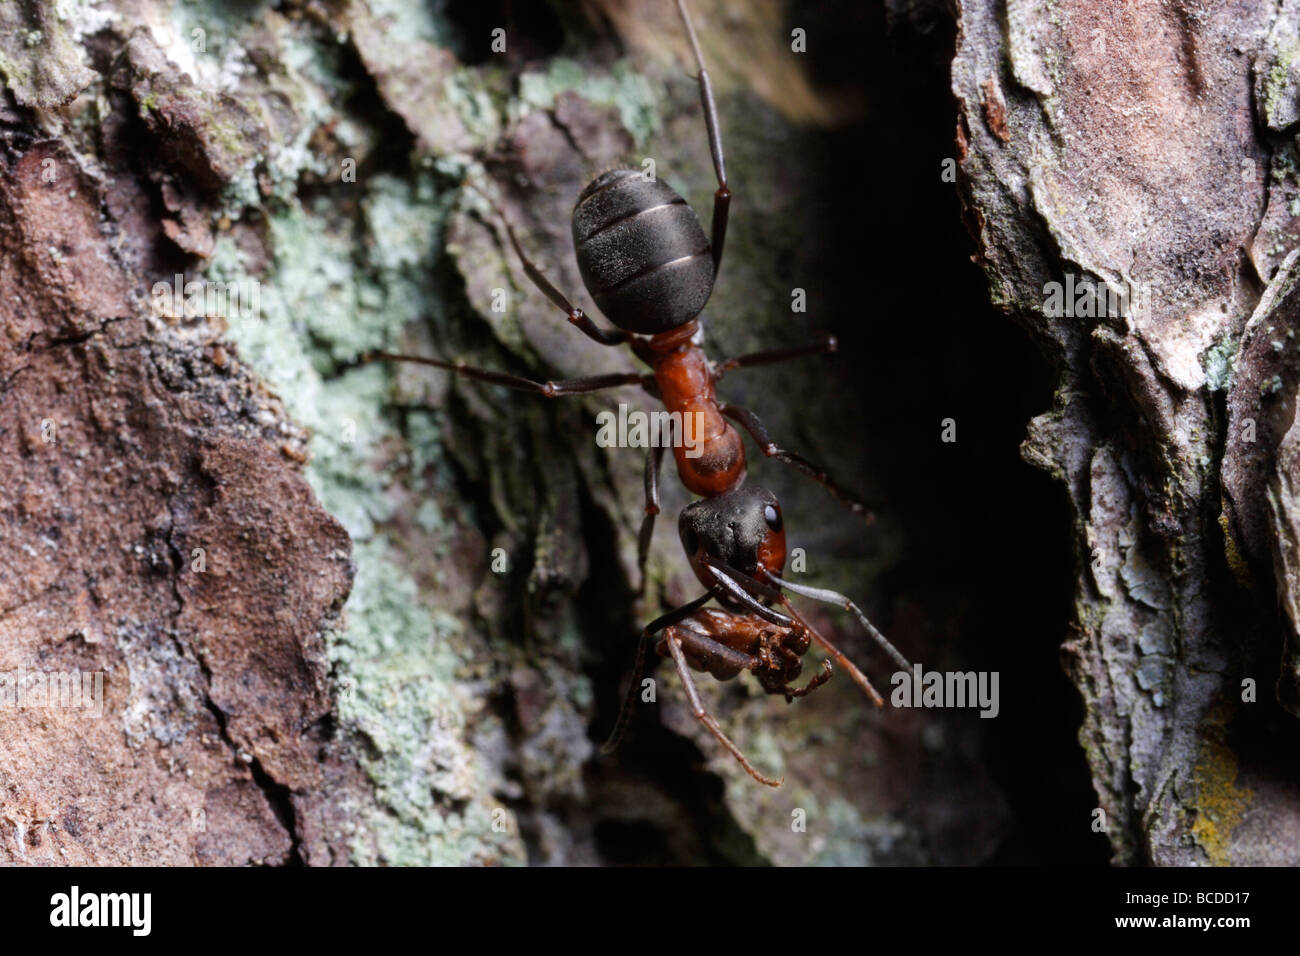 Formica rufa, el sur de la hormiga de madera o caballo ant. Un trabajador llevar presa. Foto de stock